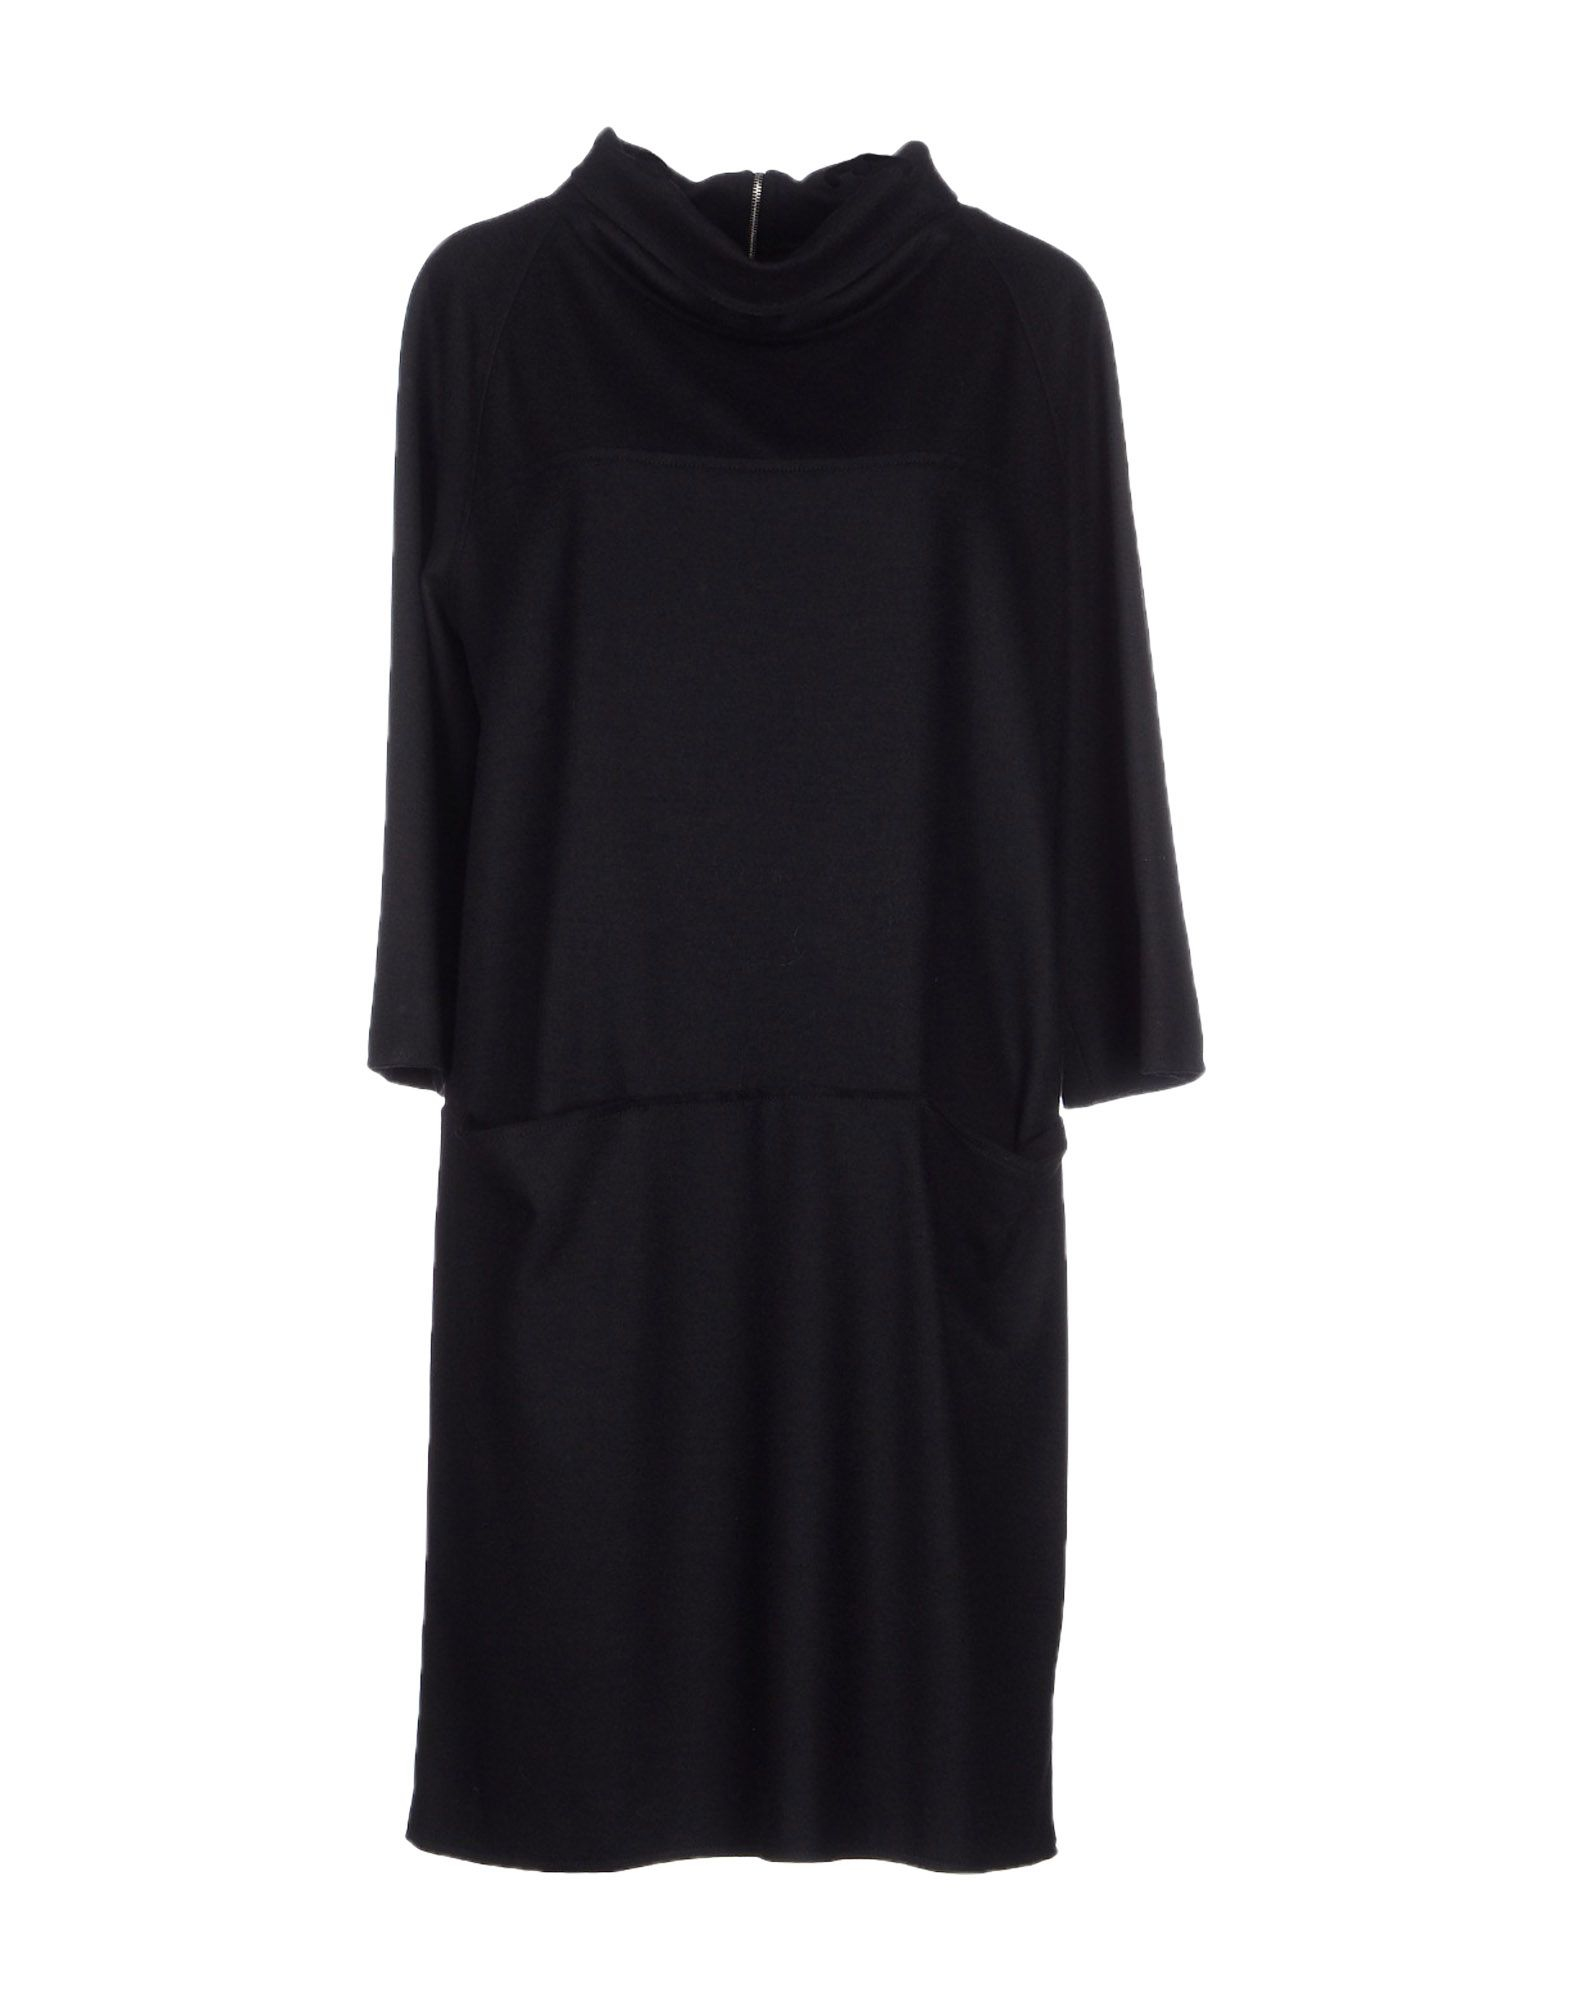 Henry cotton's Short Dress in Black | Lyst